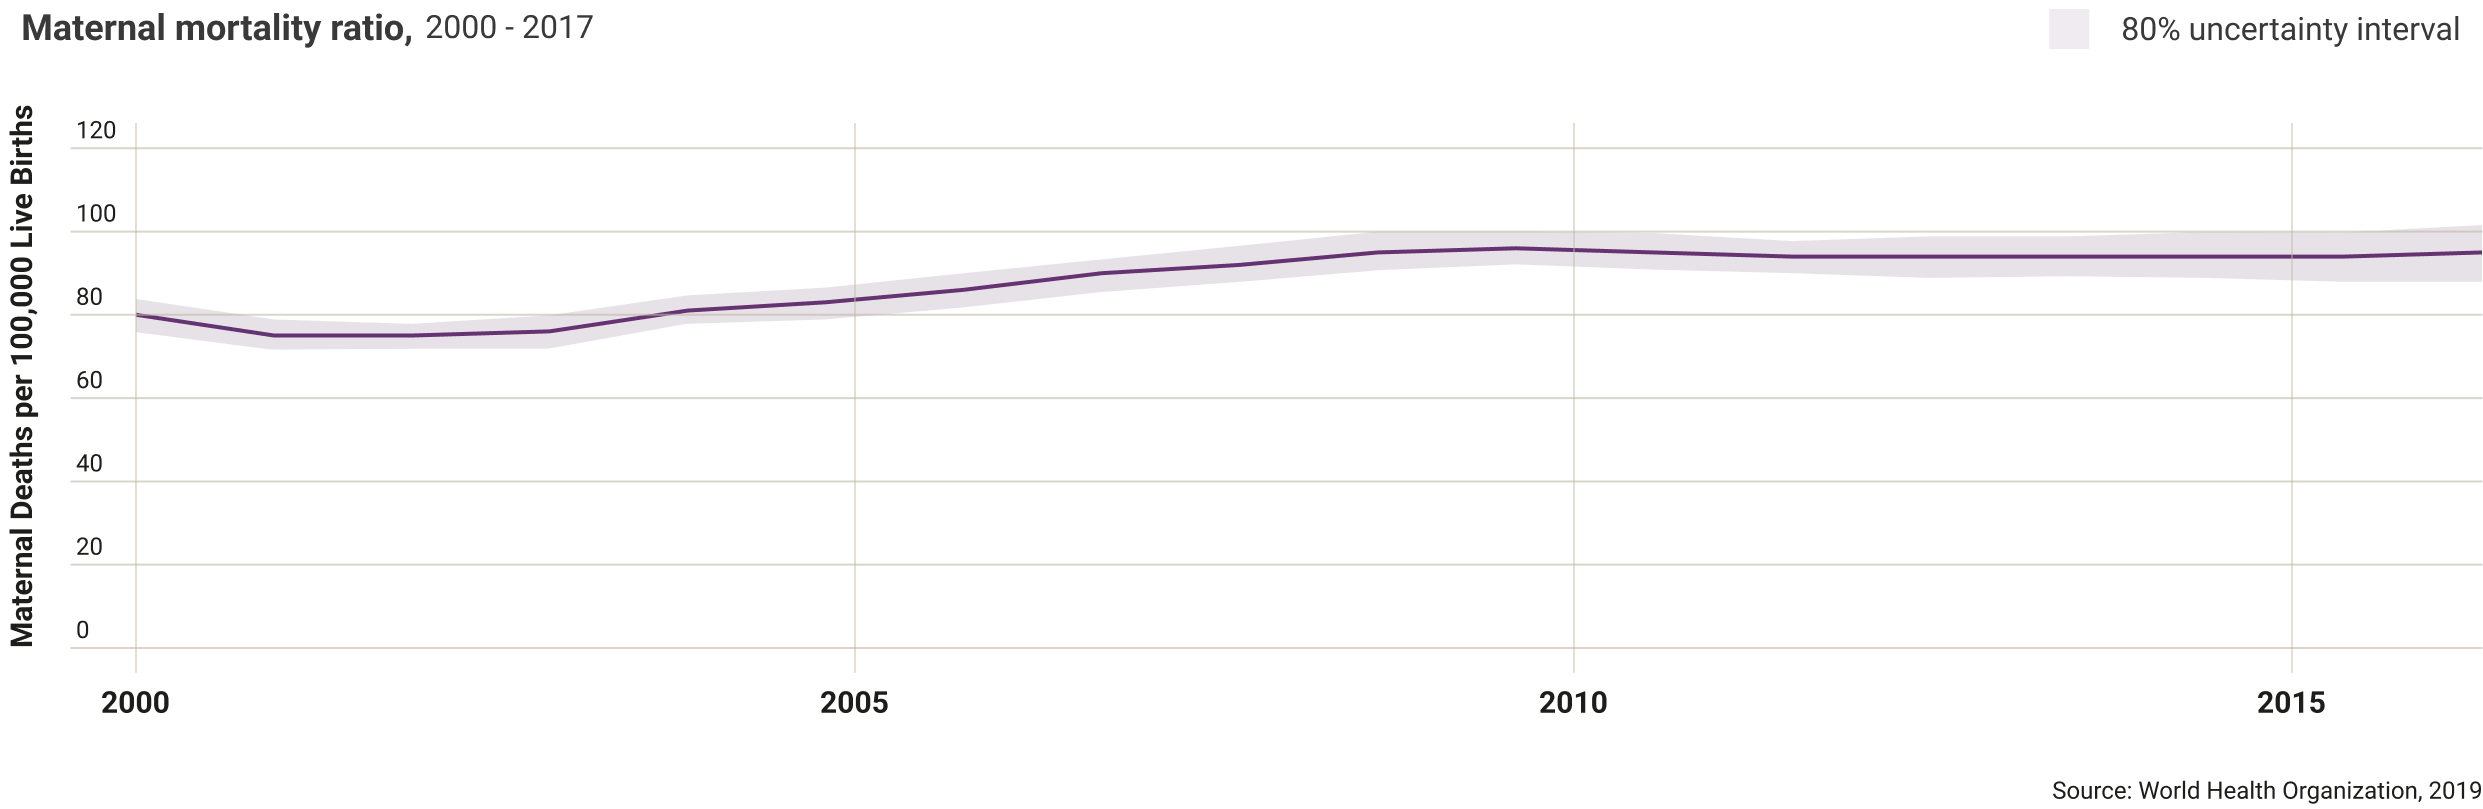 dominican-republic-maternal-mortality-ratio